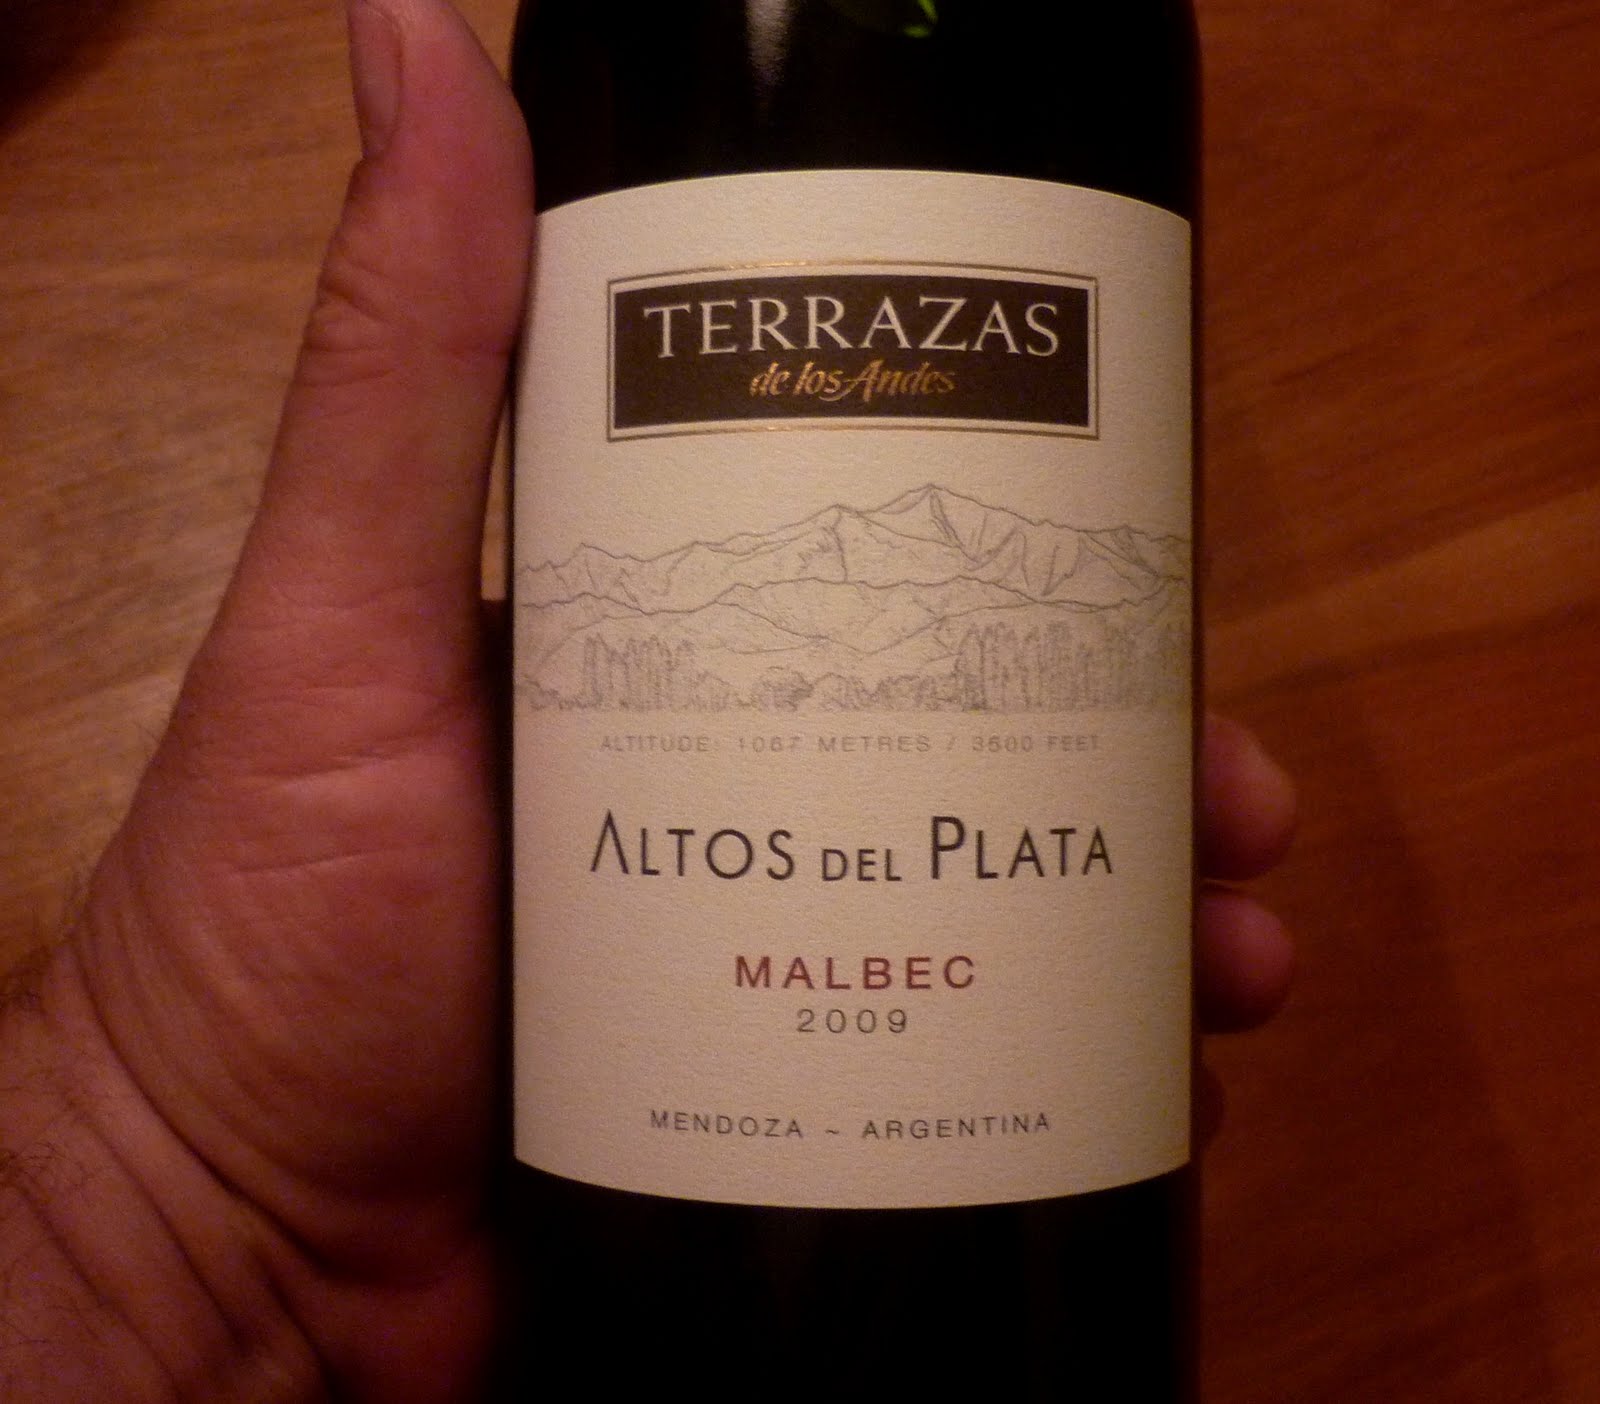 Argentina S Wines Revisited By Miguel Altos Del Plata